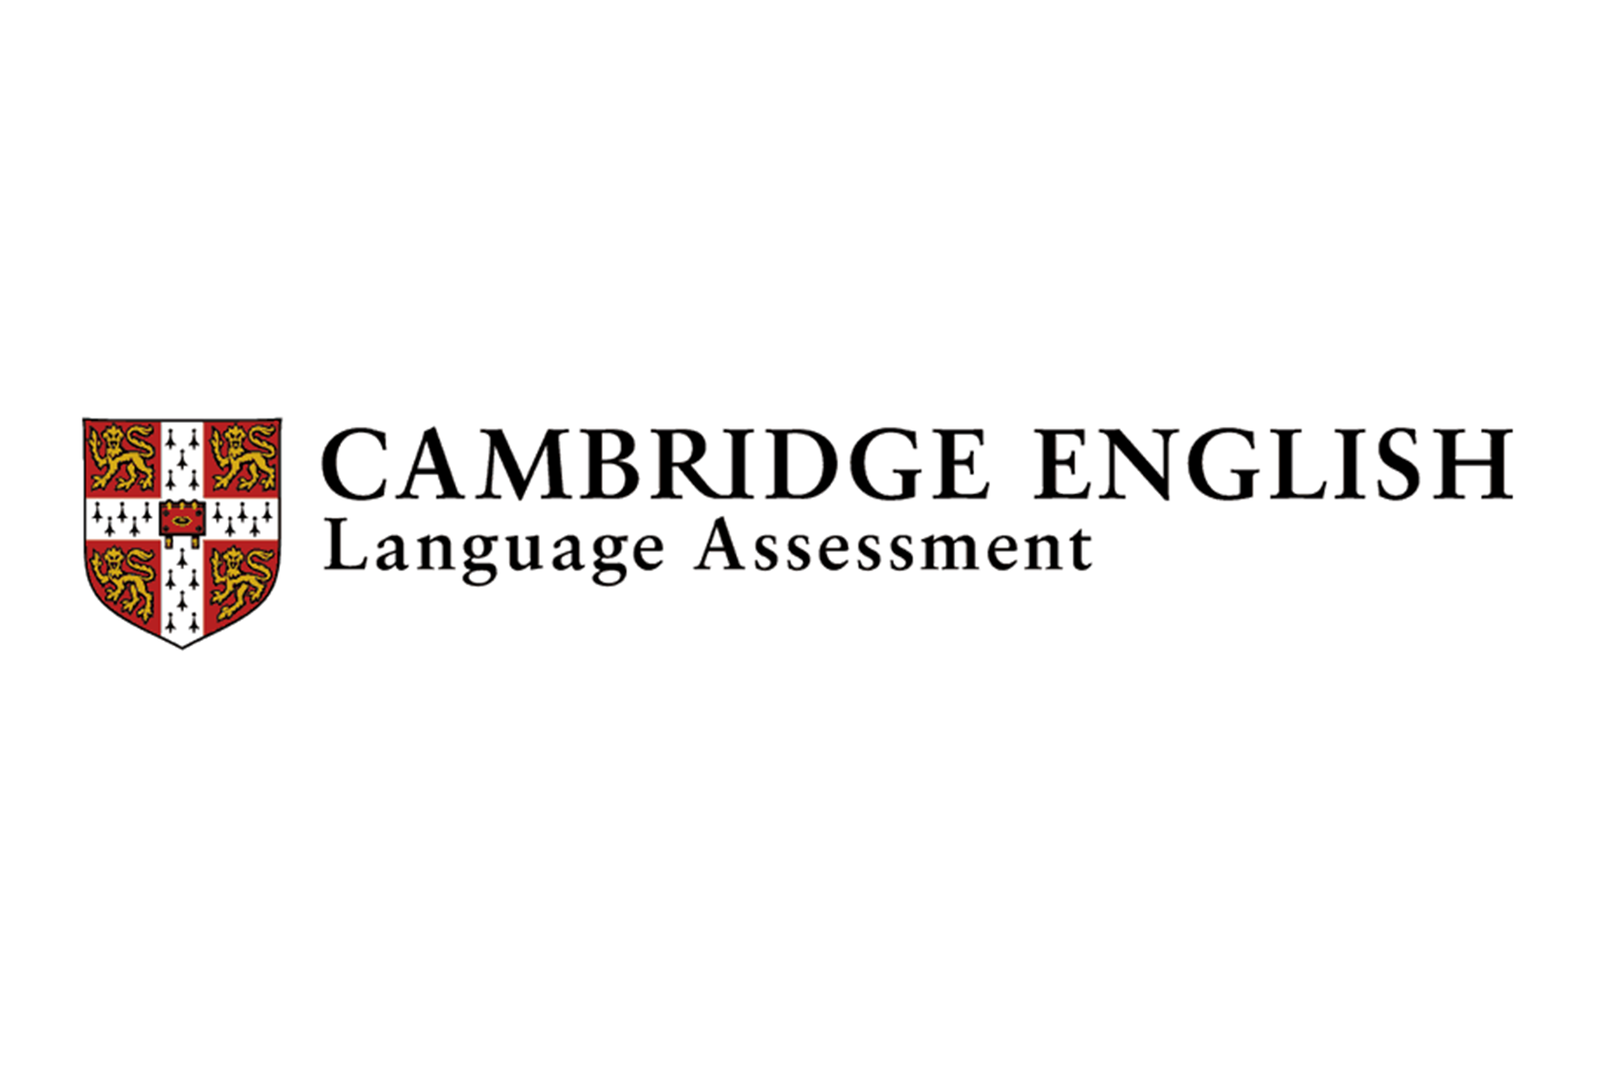 cambridge-english-language-assessment-logo